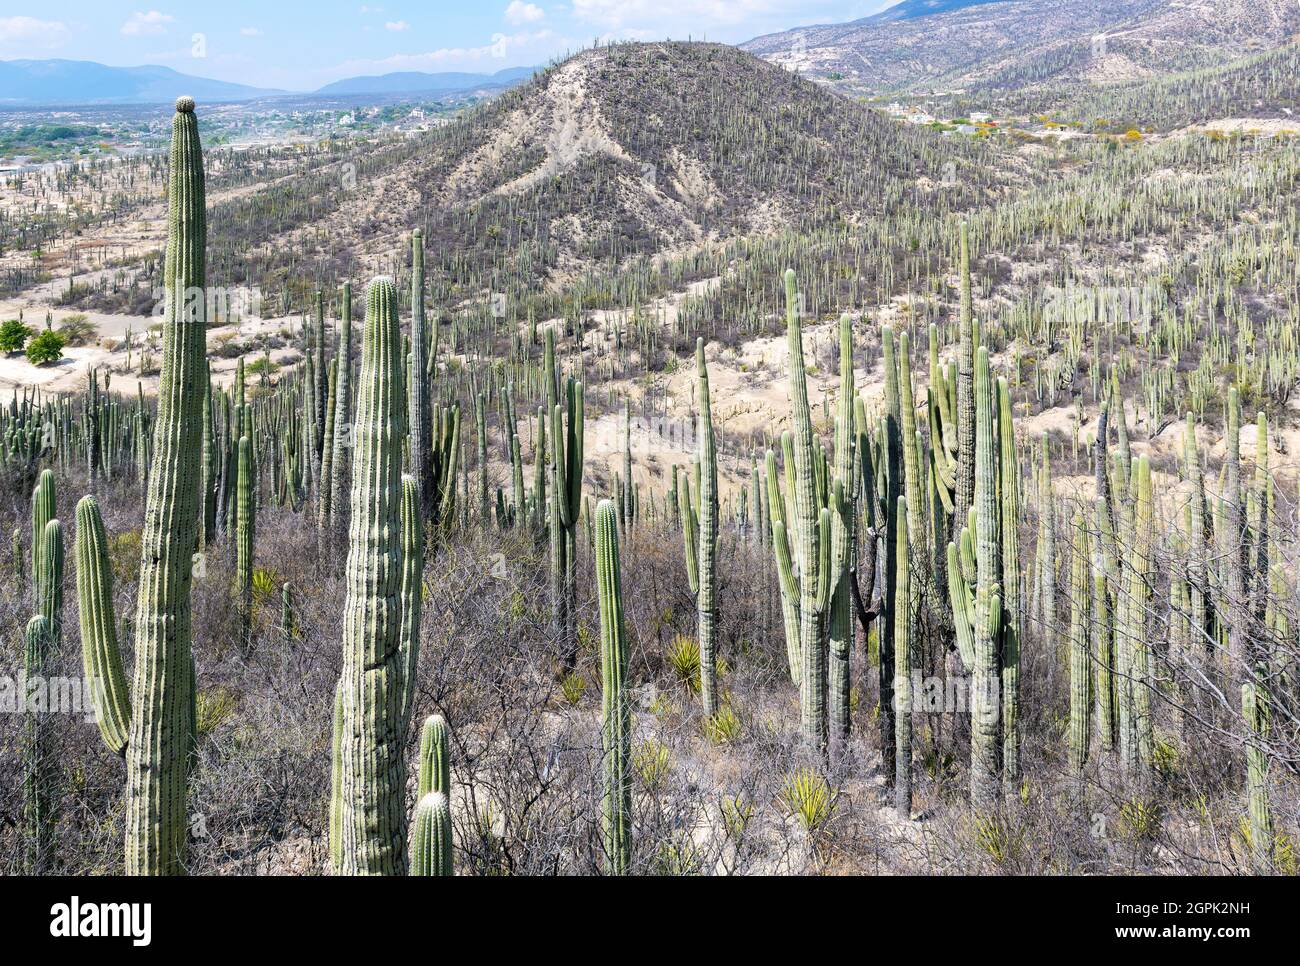 Landschaft im Tehuacan Cuicatlan Biosphärenreservat mit Säulenkaktus (Ceroidkaktus), Oaxaca, Mexiko. Stockfoto